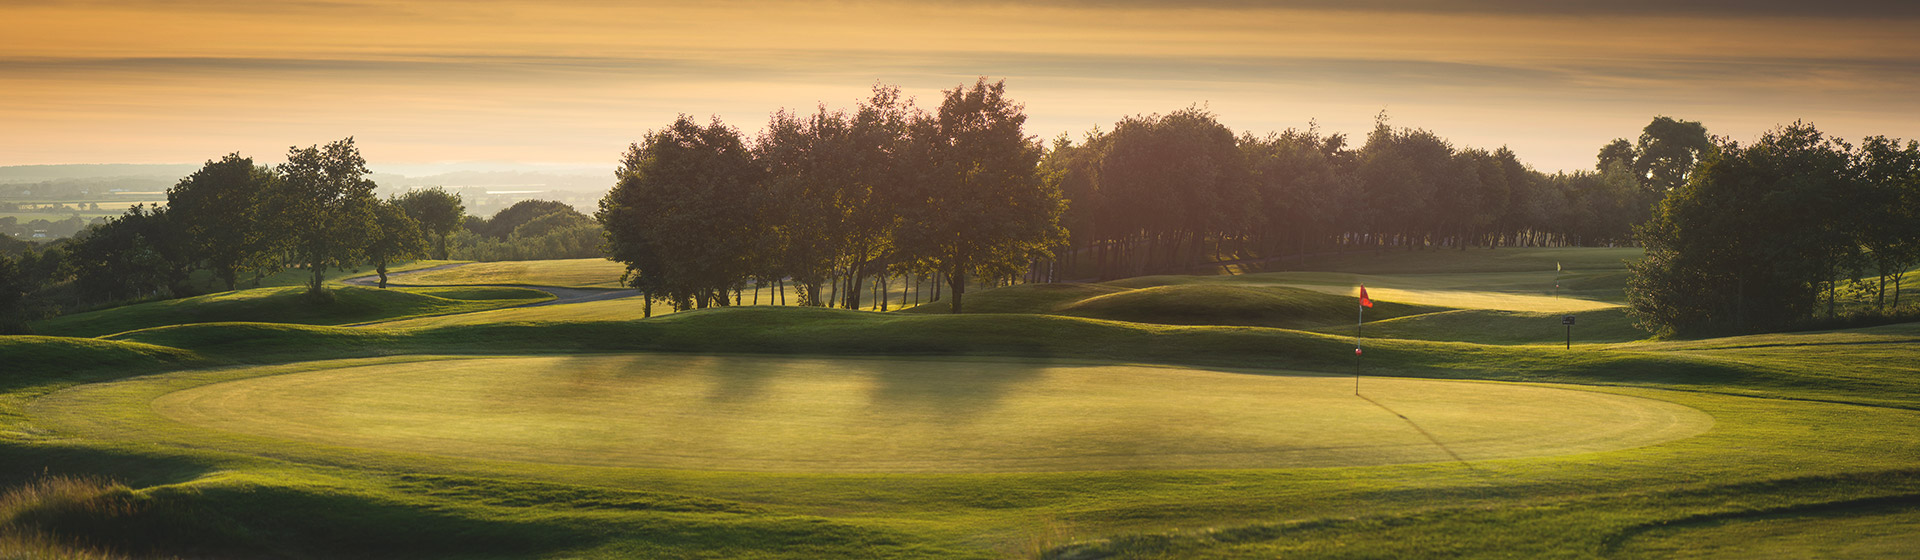 Honeywell Golf Course at Wabash, Indiana